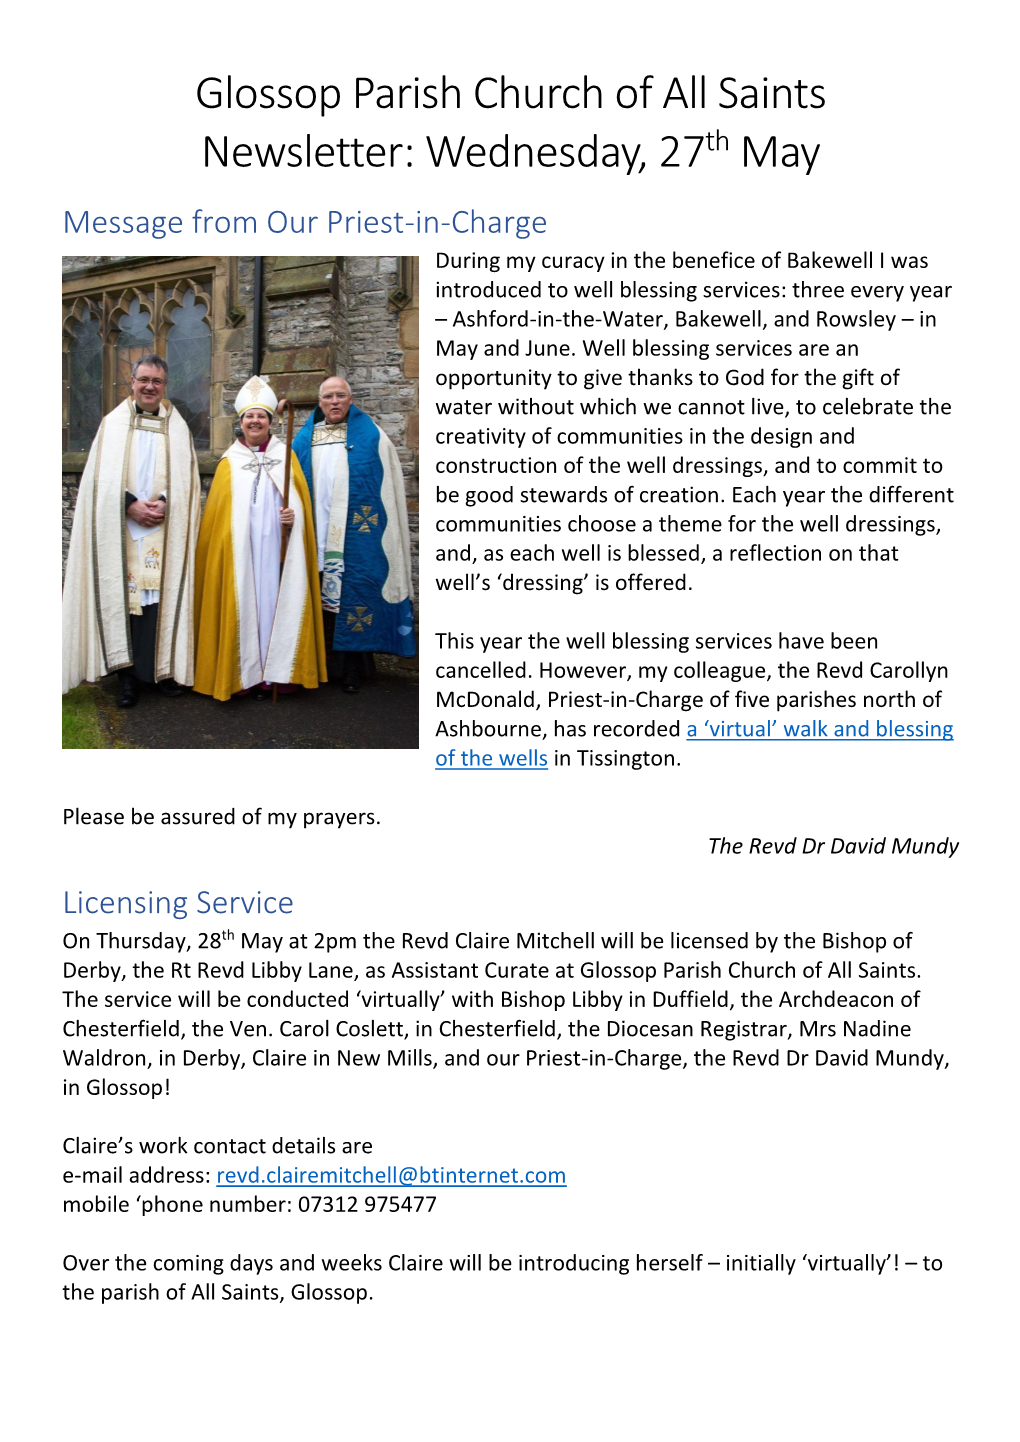 Glossop Parish Church of All Saints Newsletter: Wednesday, 27Th